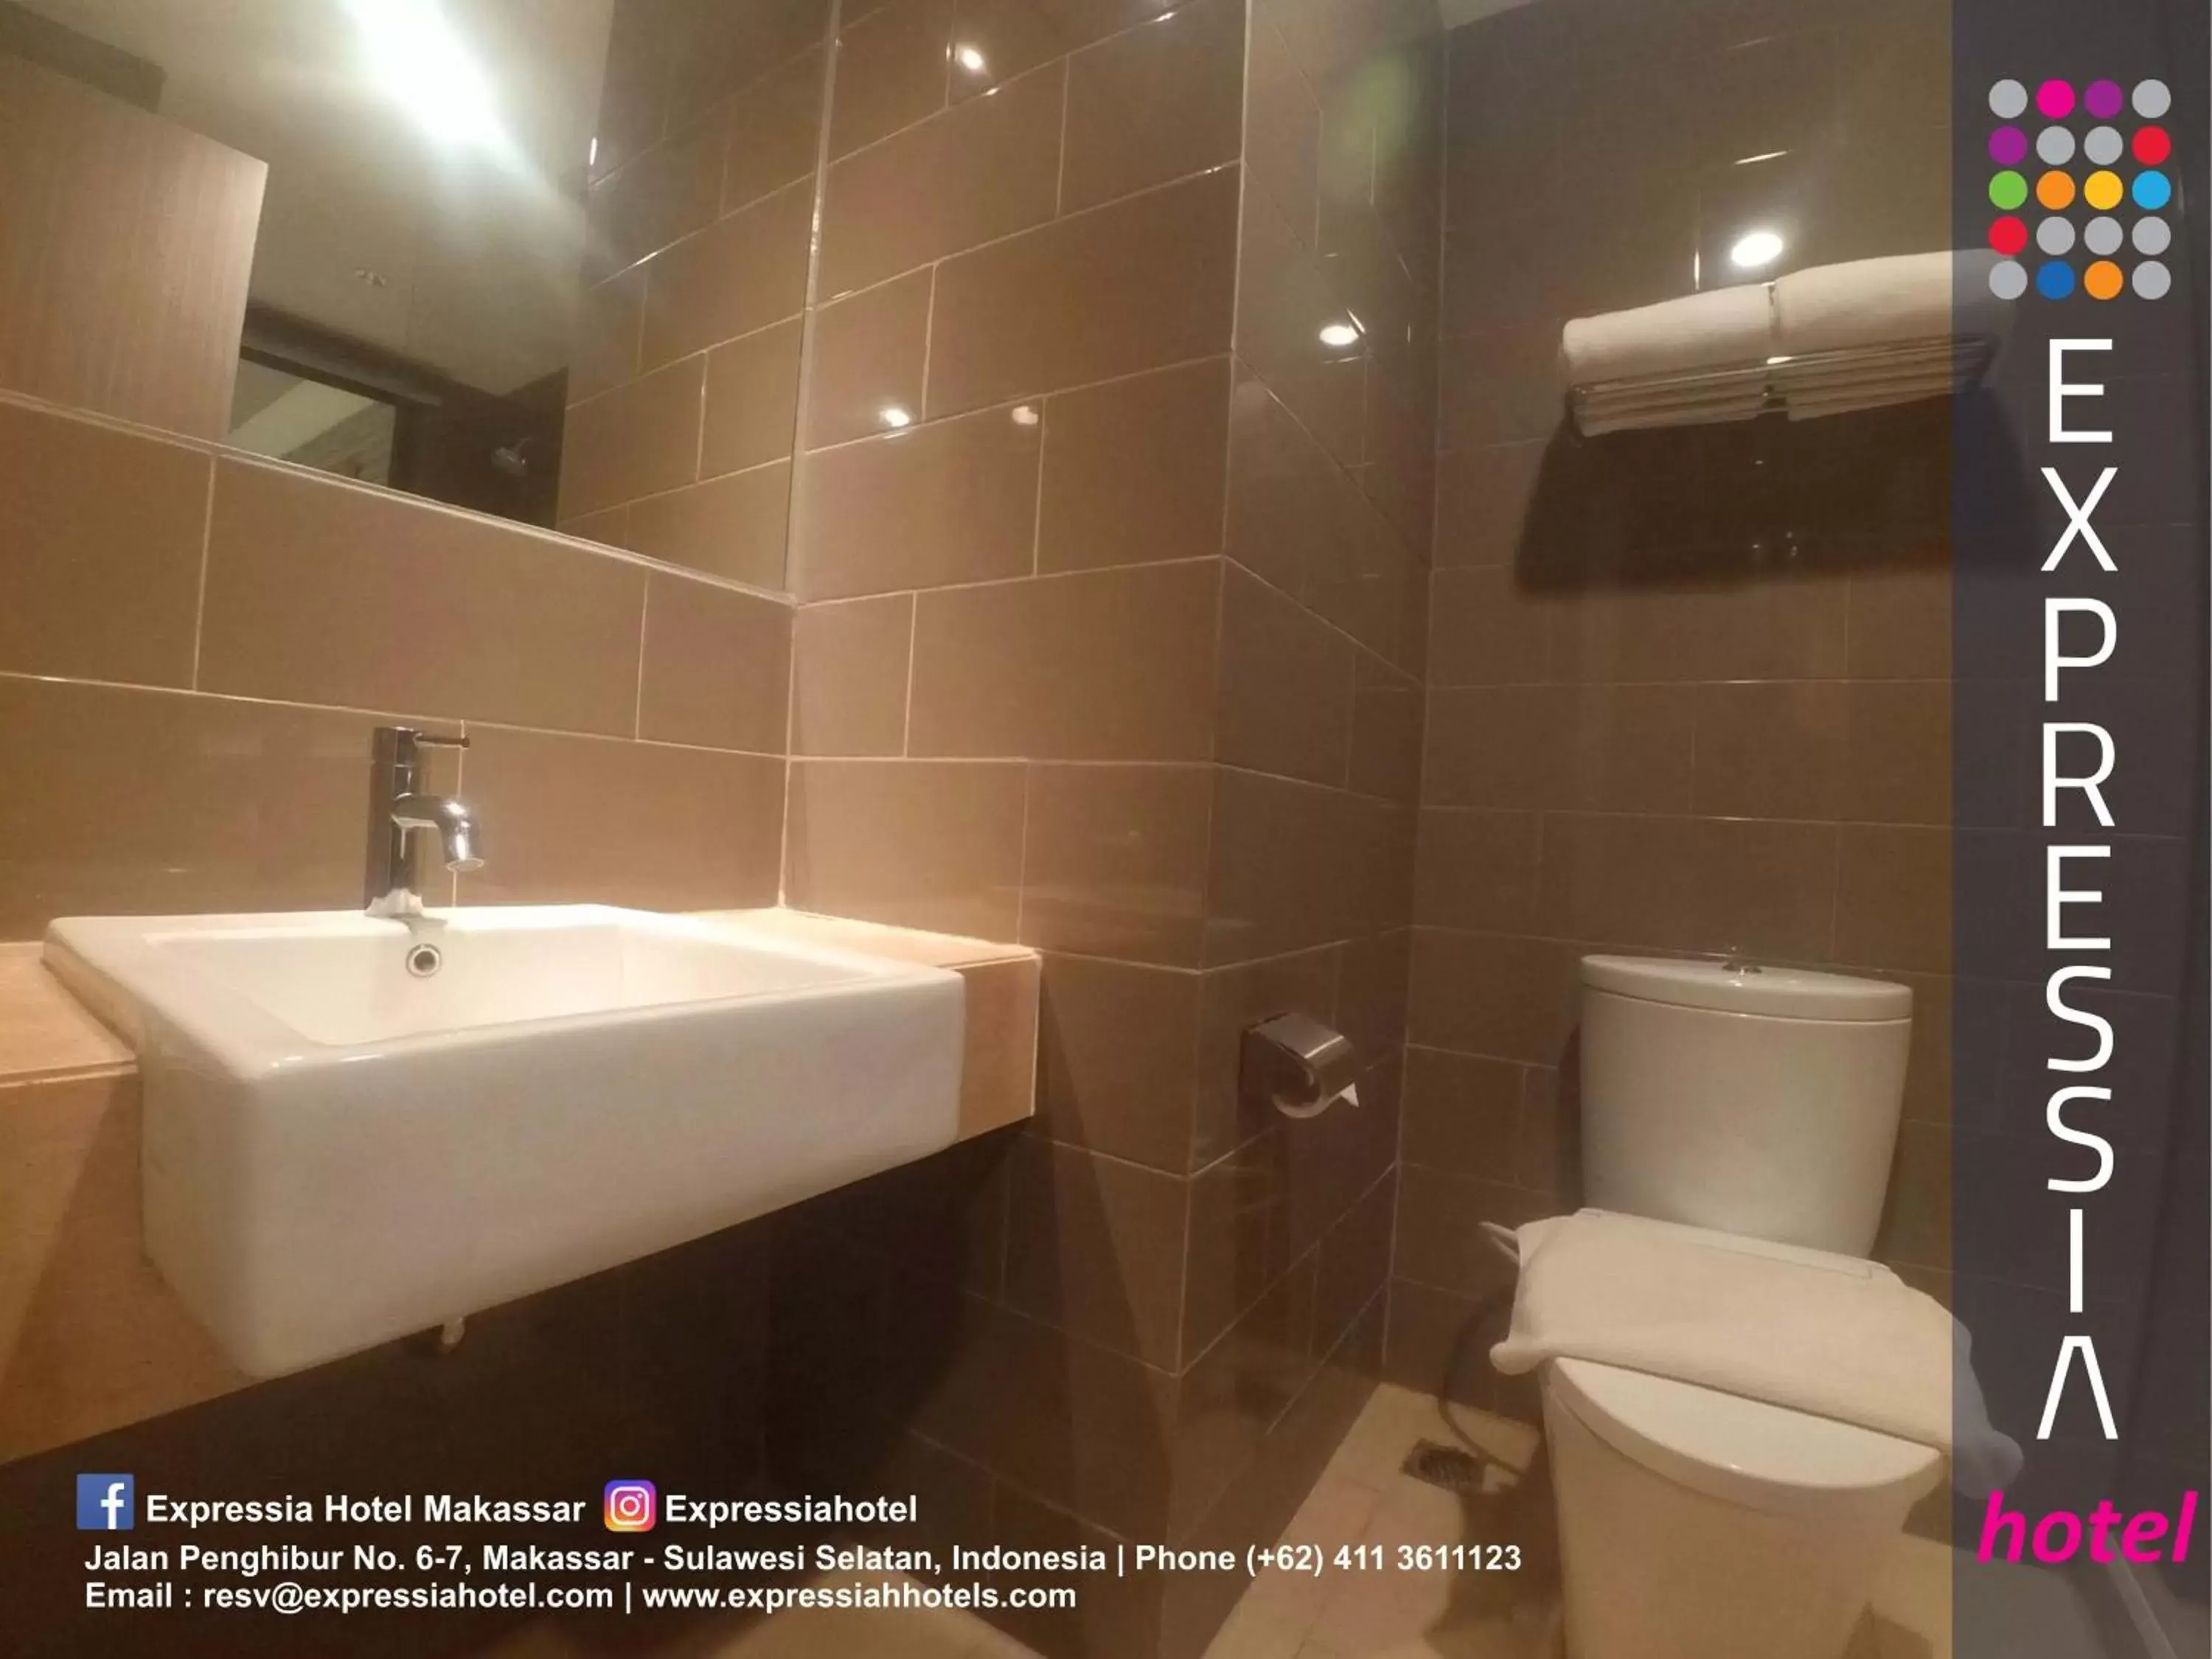 Bathroom in Expressia Hotel Makassar